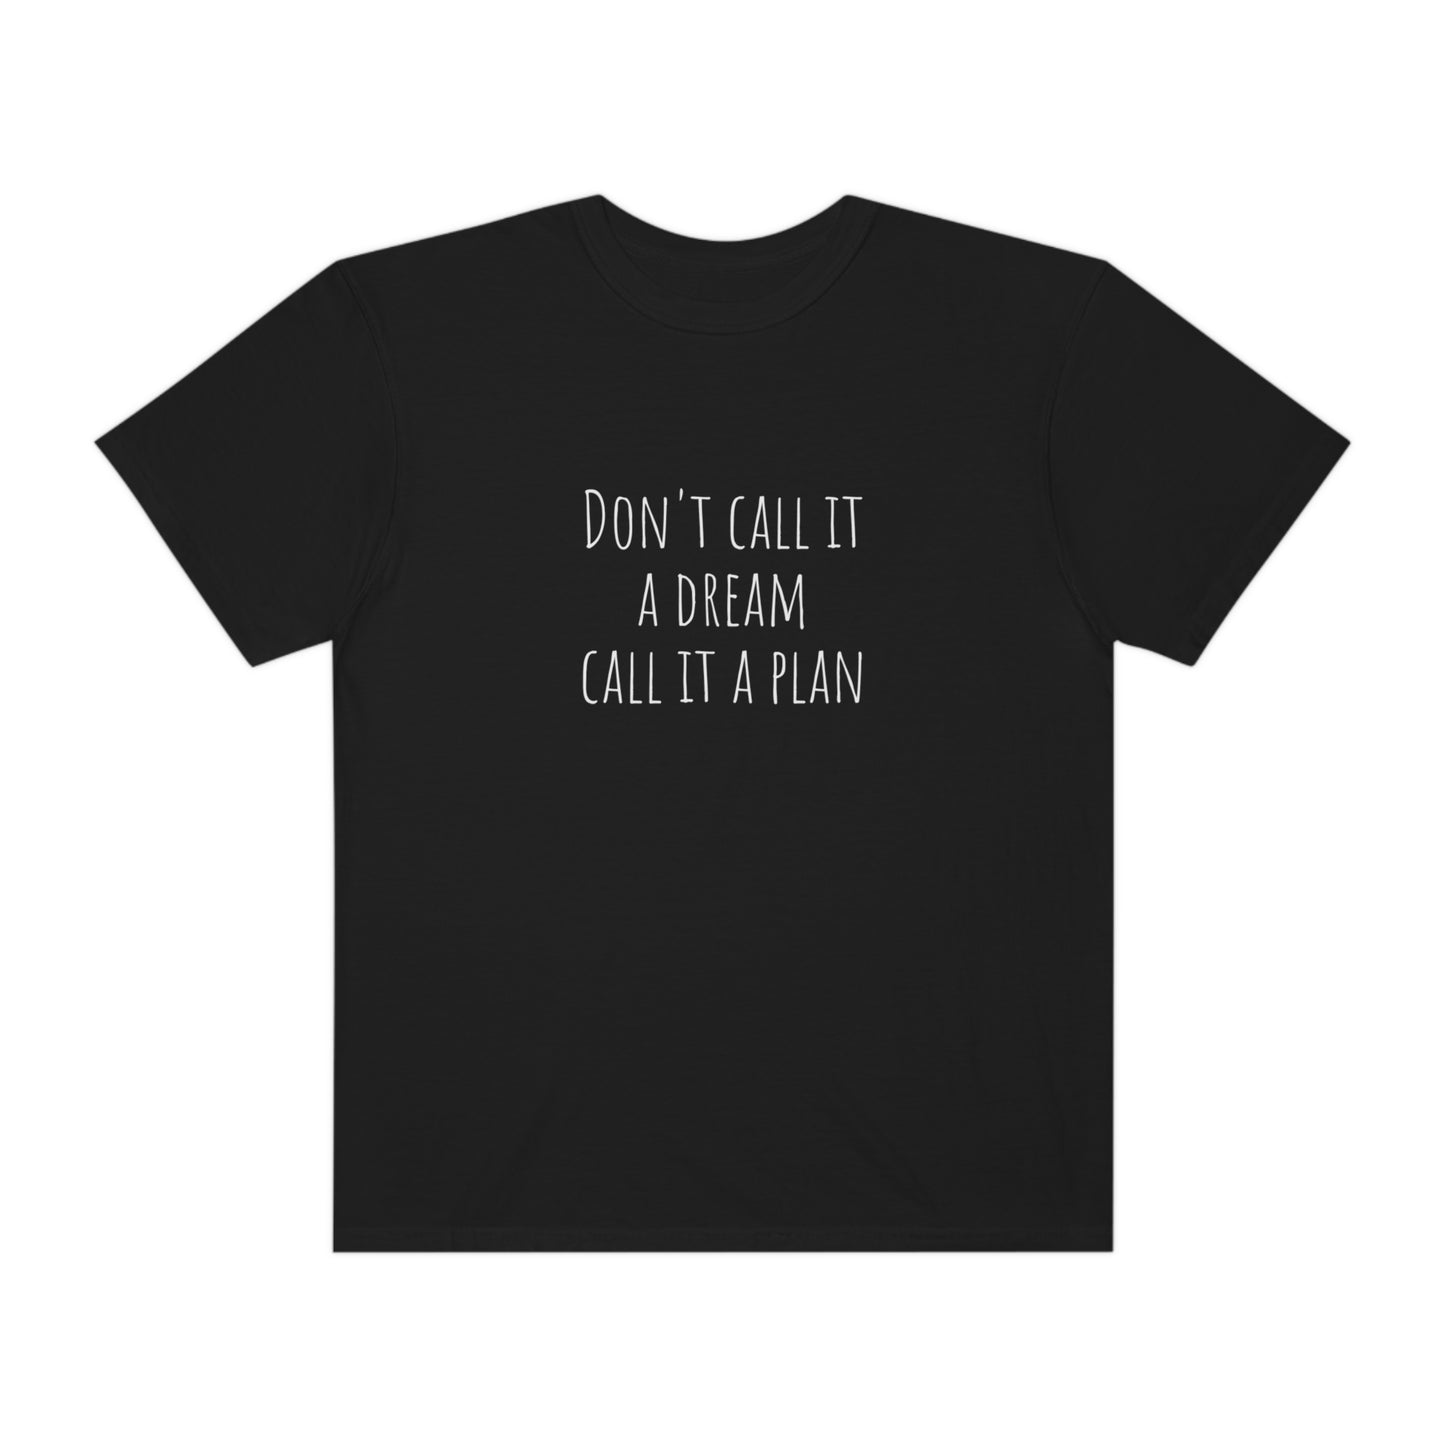 Don’t call it a dream call it a plan T-shirt